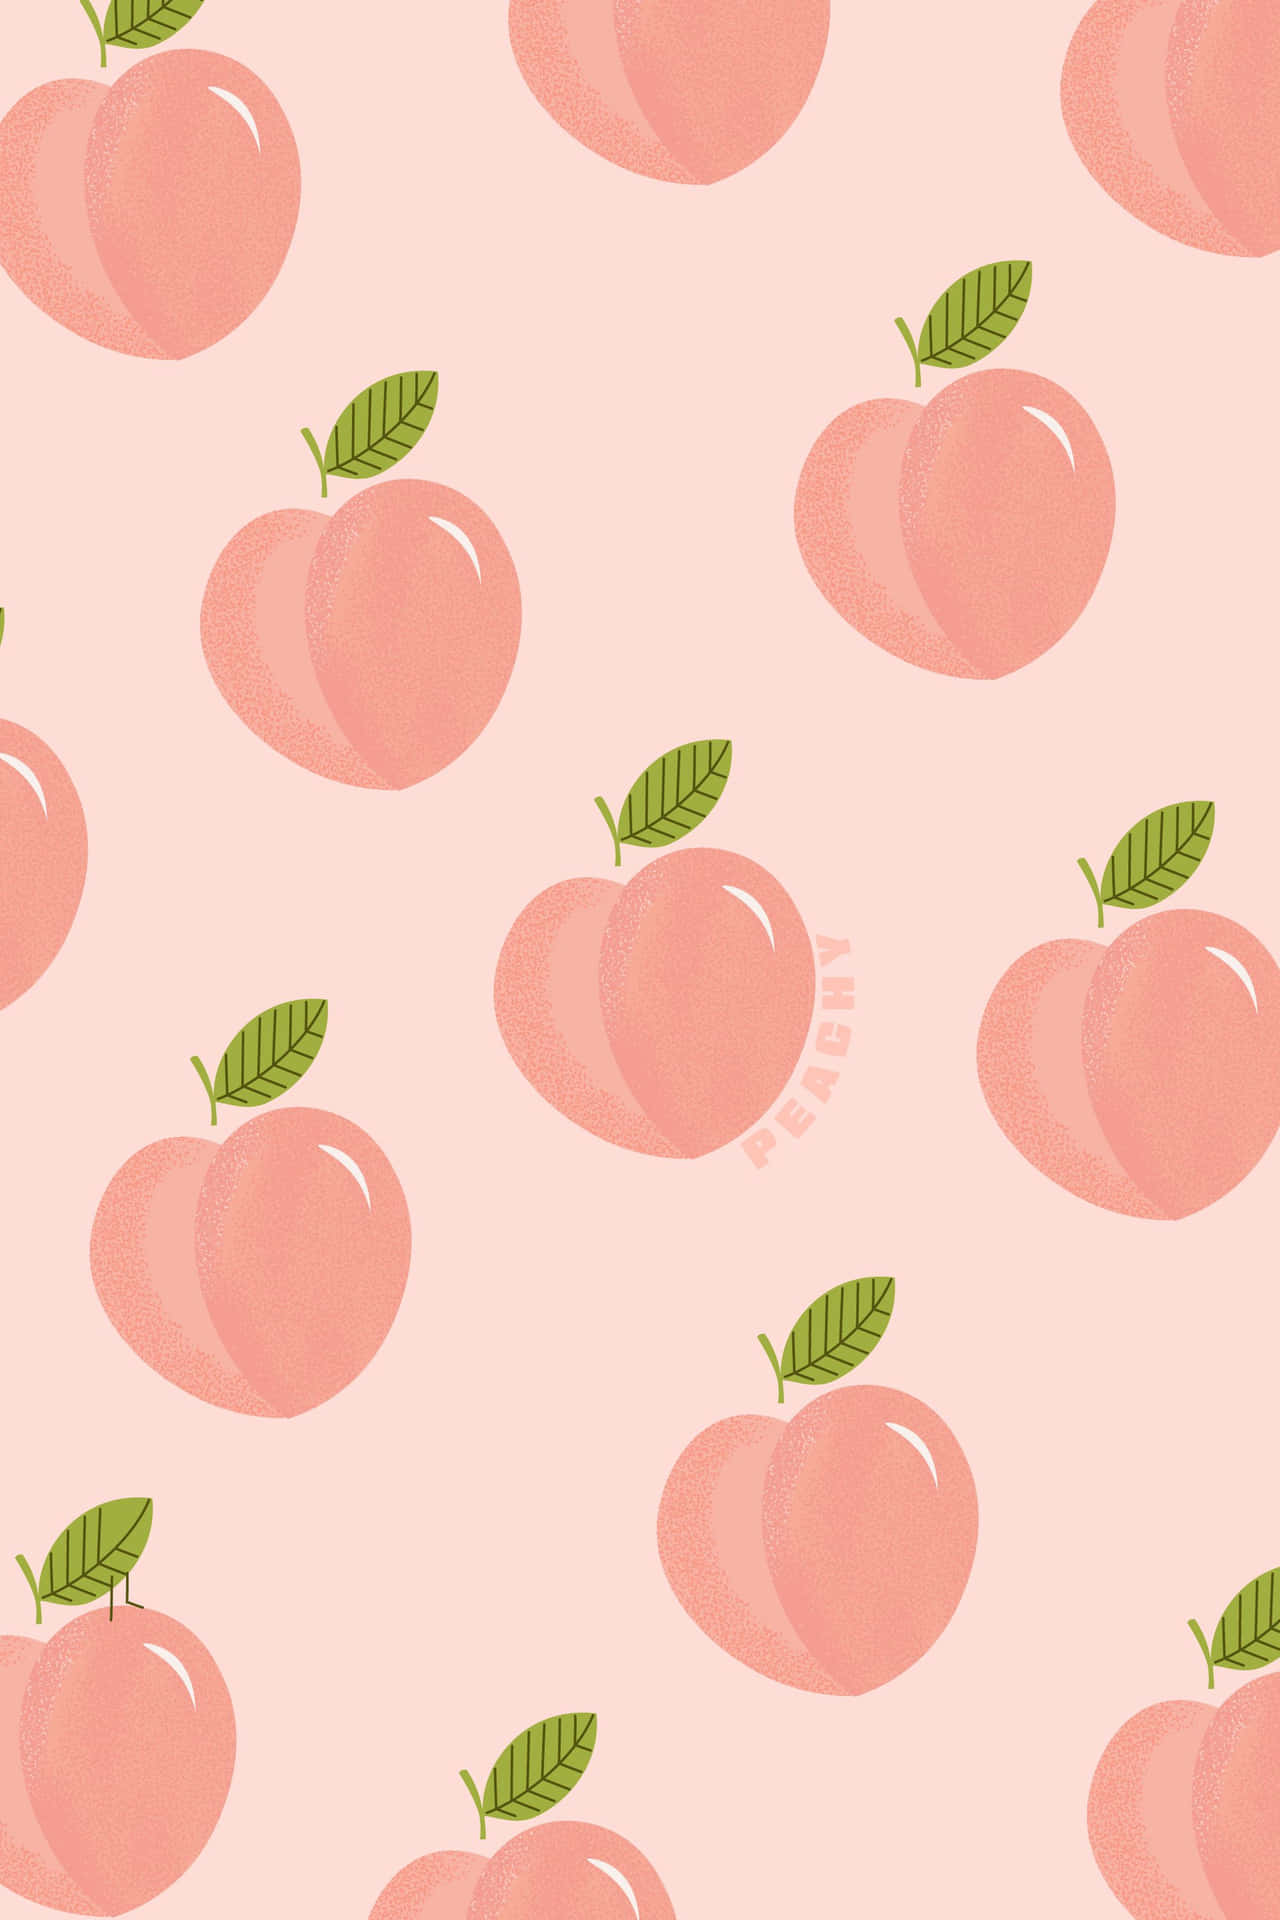 Cute Peach Pattern Art Wallpaper